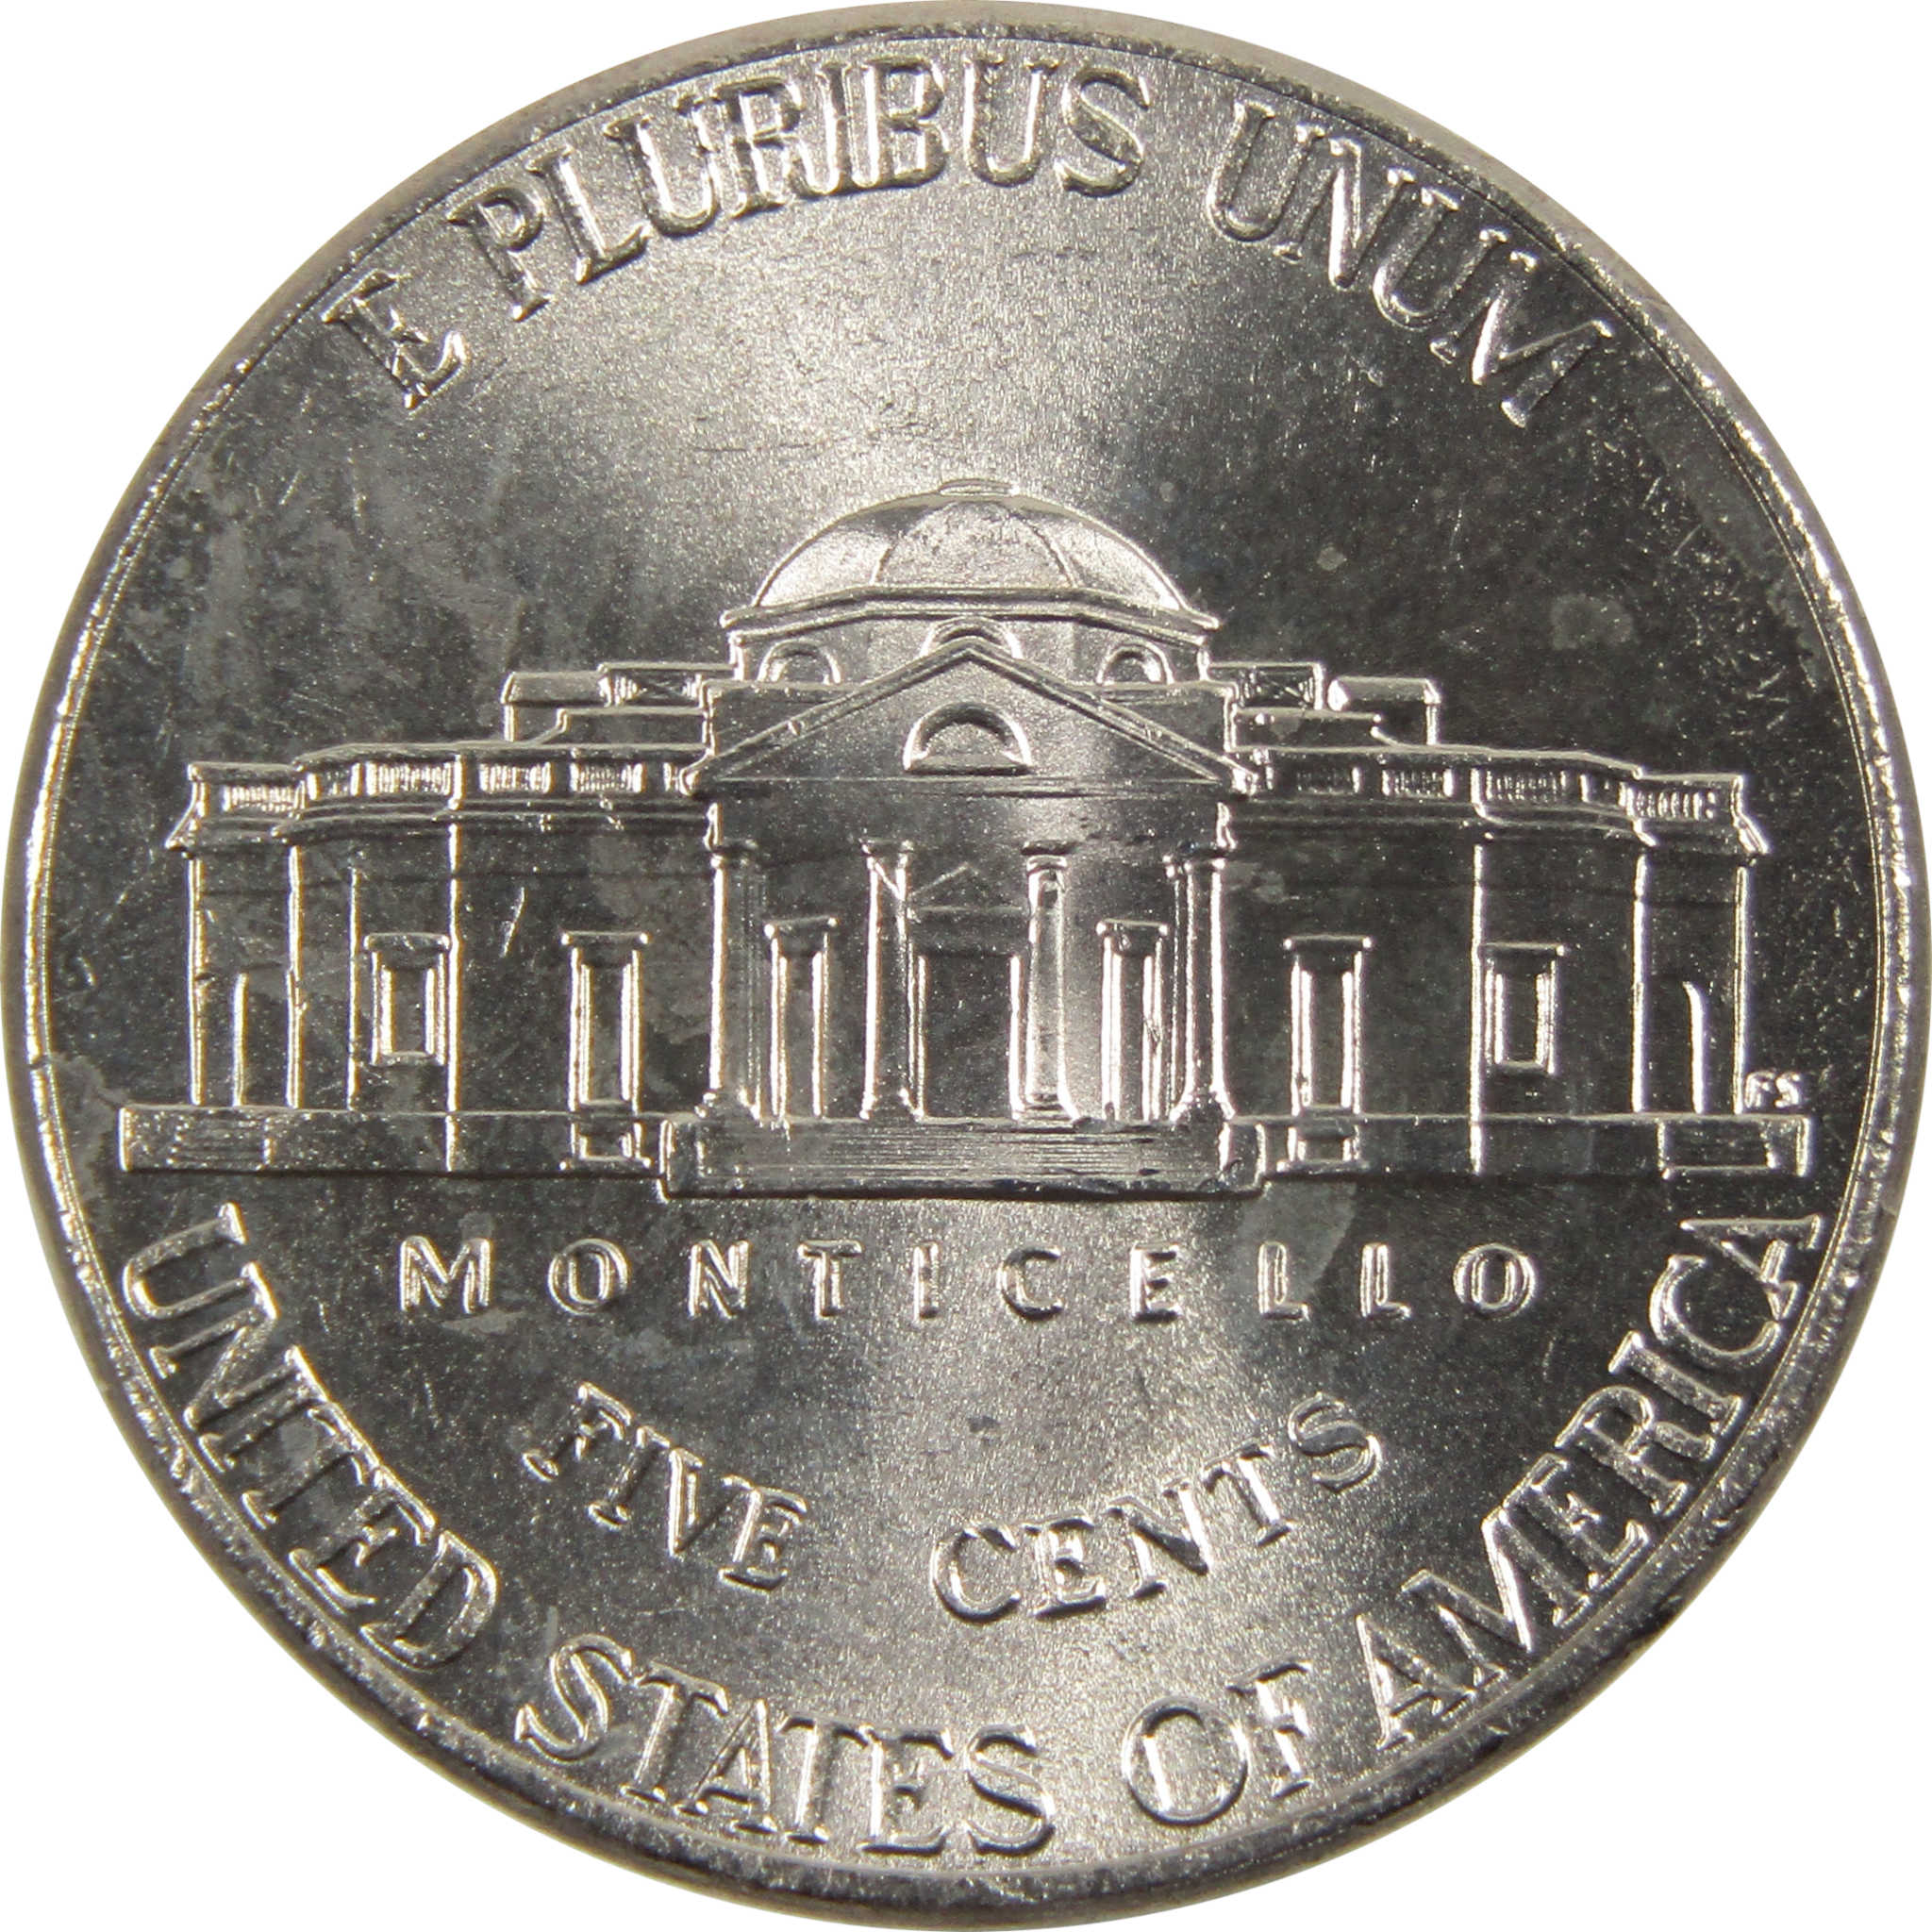 2020 P Jefferson Nickel BU Uncirculated 5c Coin